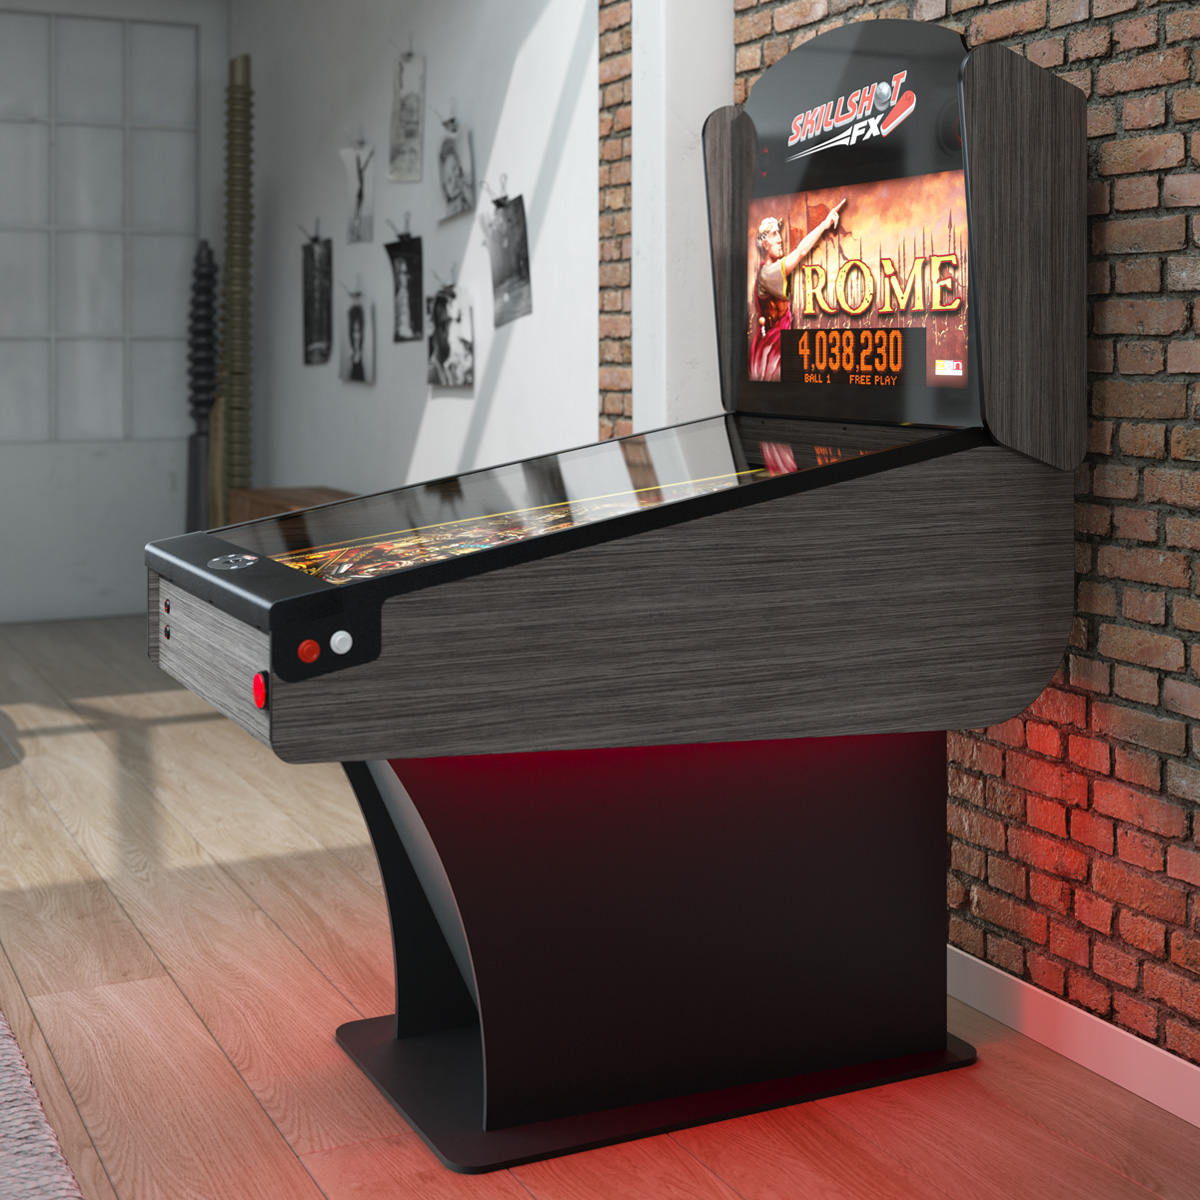 Skillshot FX Virtual Pinball Machine With a (55 Playfield - 96